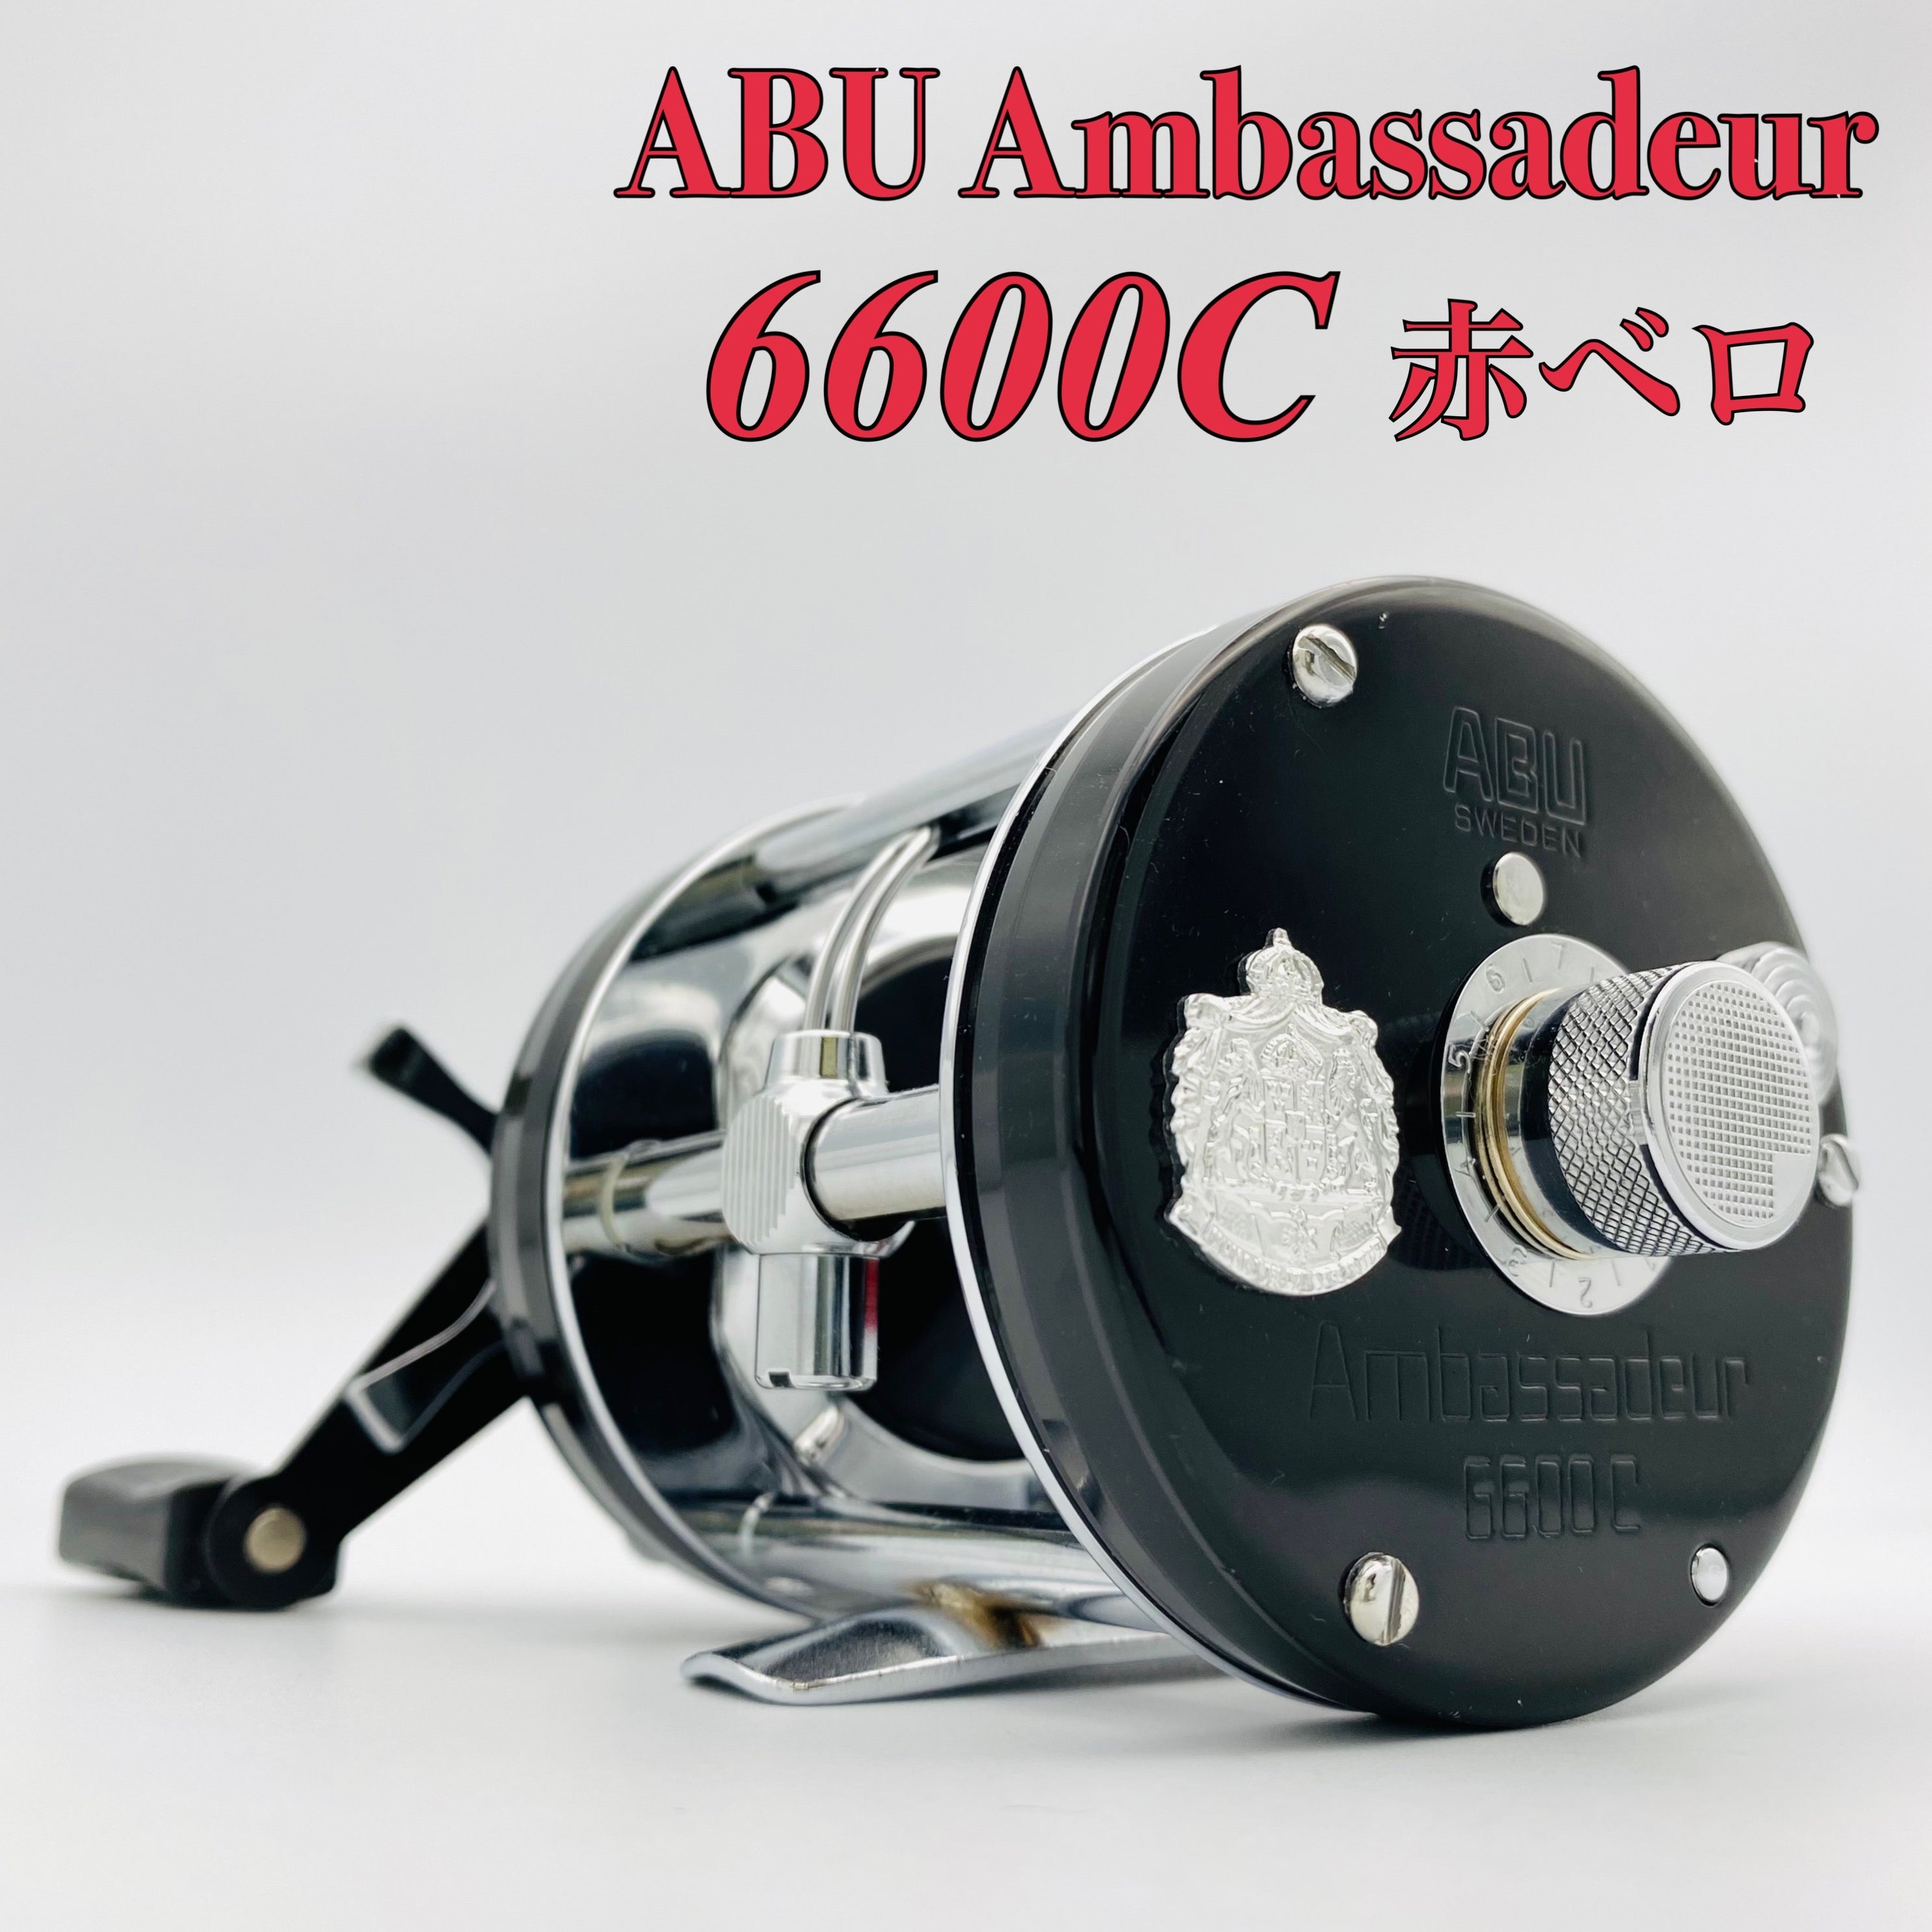 Abu Ambassadeur 6600C 赤ベロ 770900 (A)